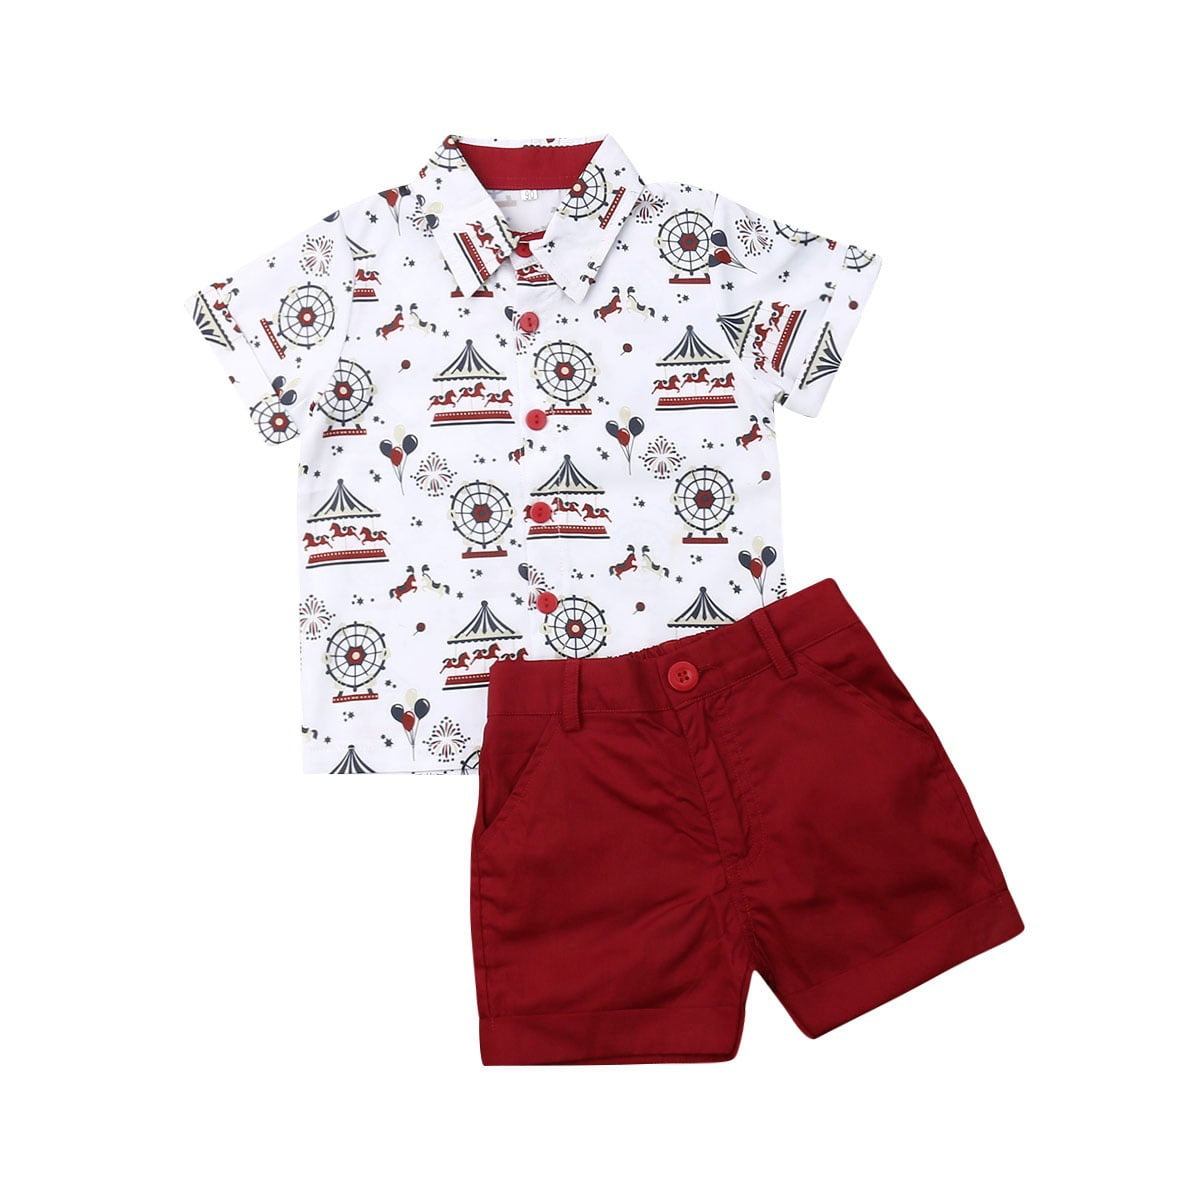 Toddler Kids Baby Boys Summer Cartoon Tops T-Shirt Shorts Pants Outfits Set 